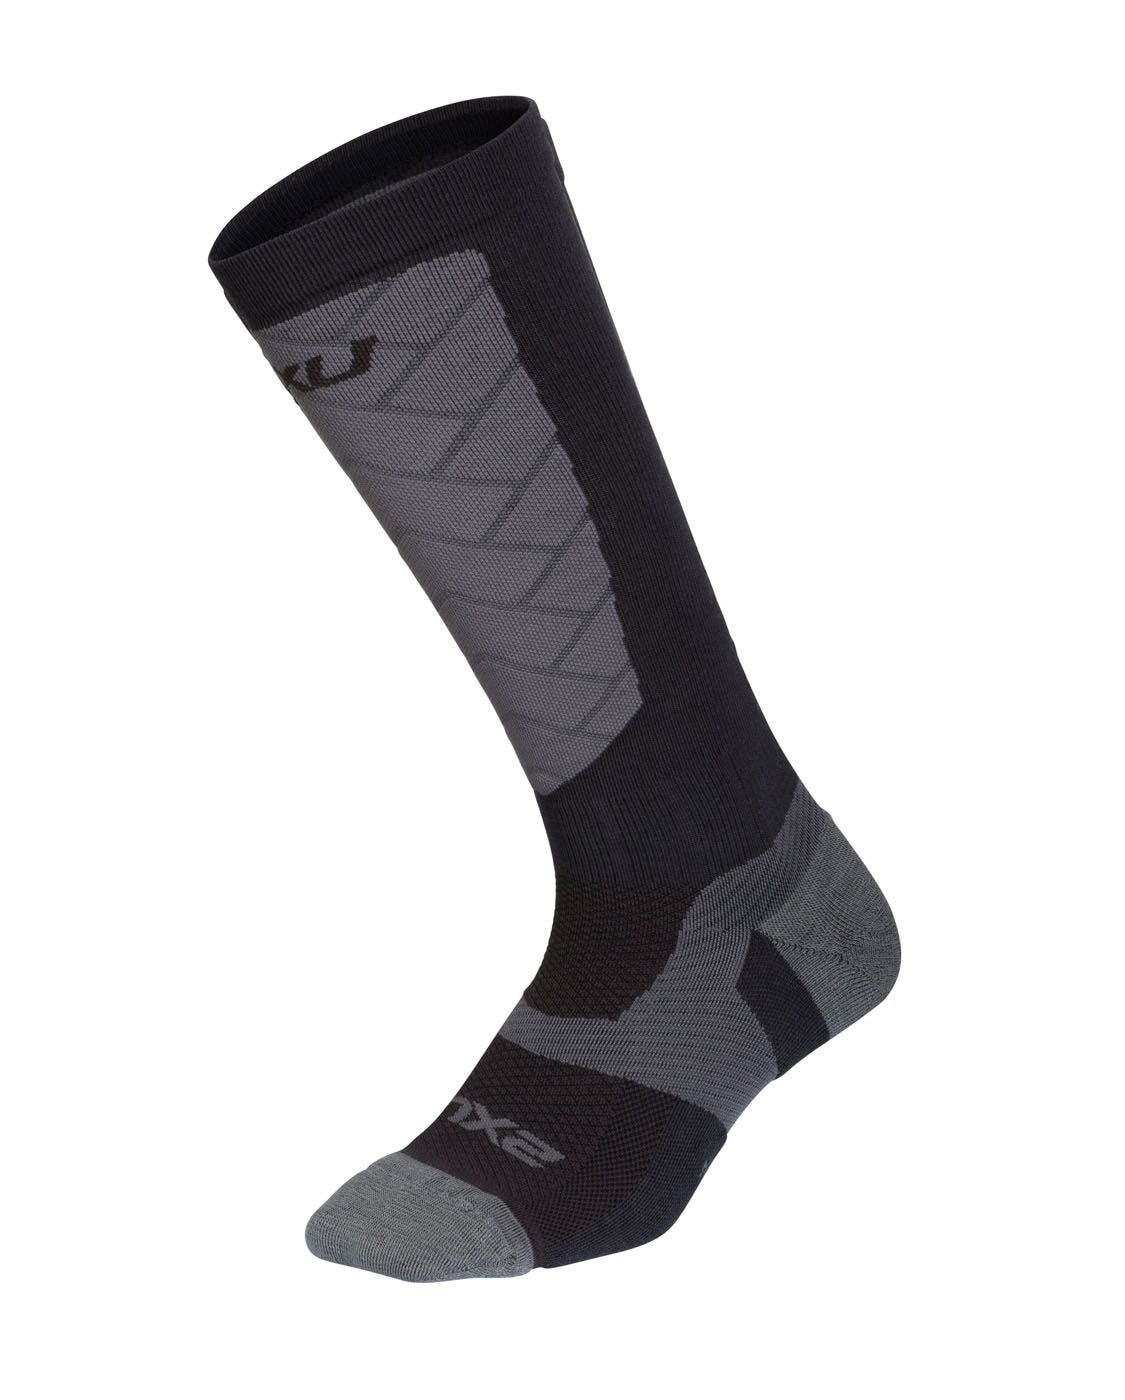 Vectr Alpine Compression Socks